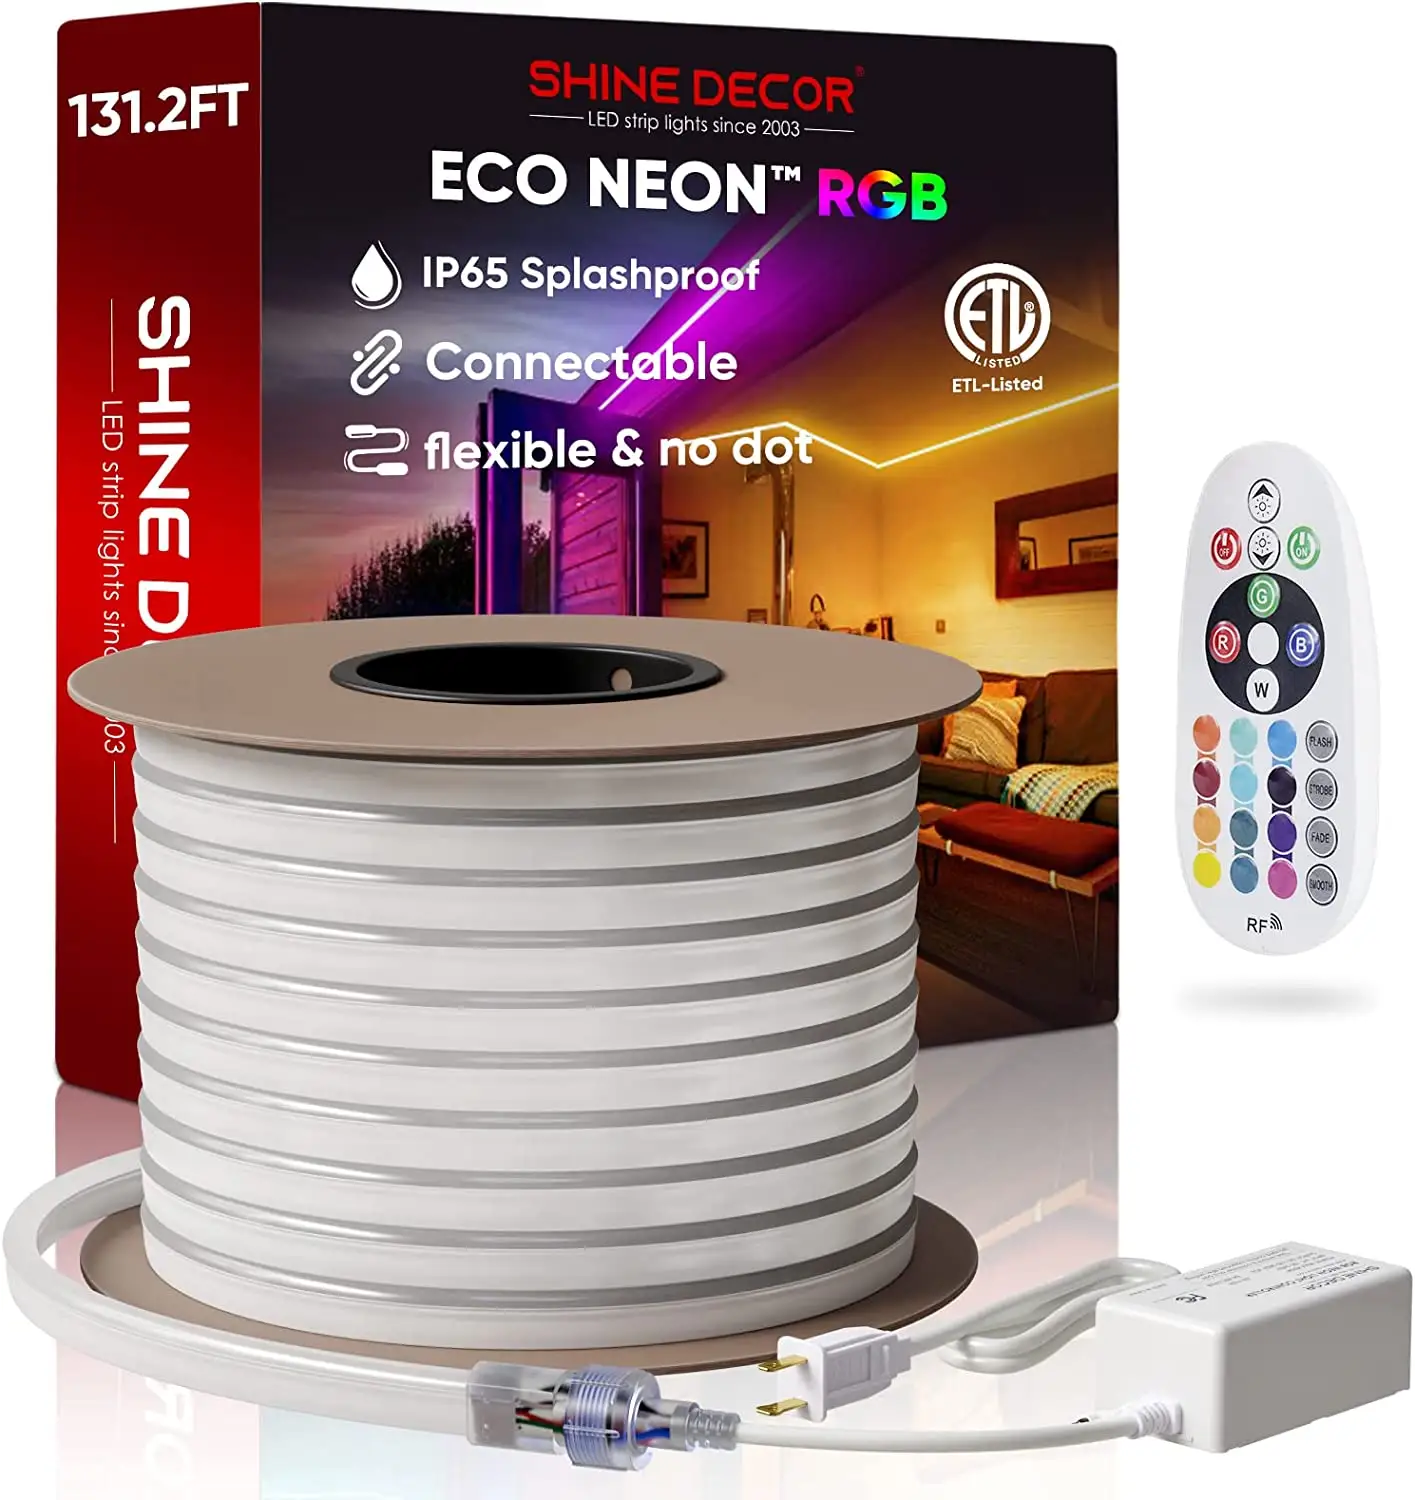 Hotsale Durable Flexible RGB LED Neon Beleuchtung für Feiertage Dekoration Great Led Neon Strip